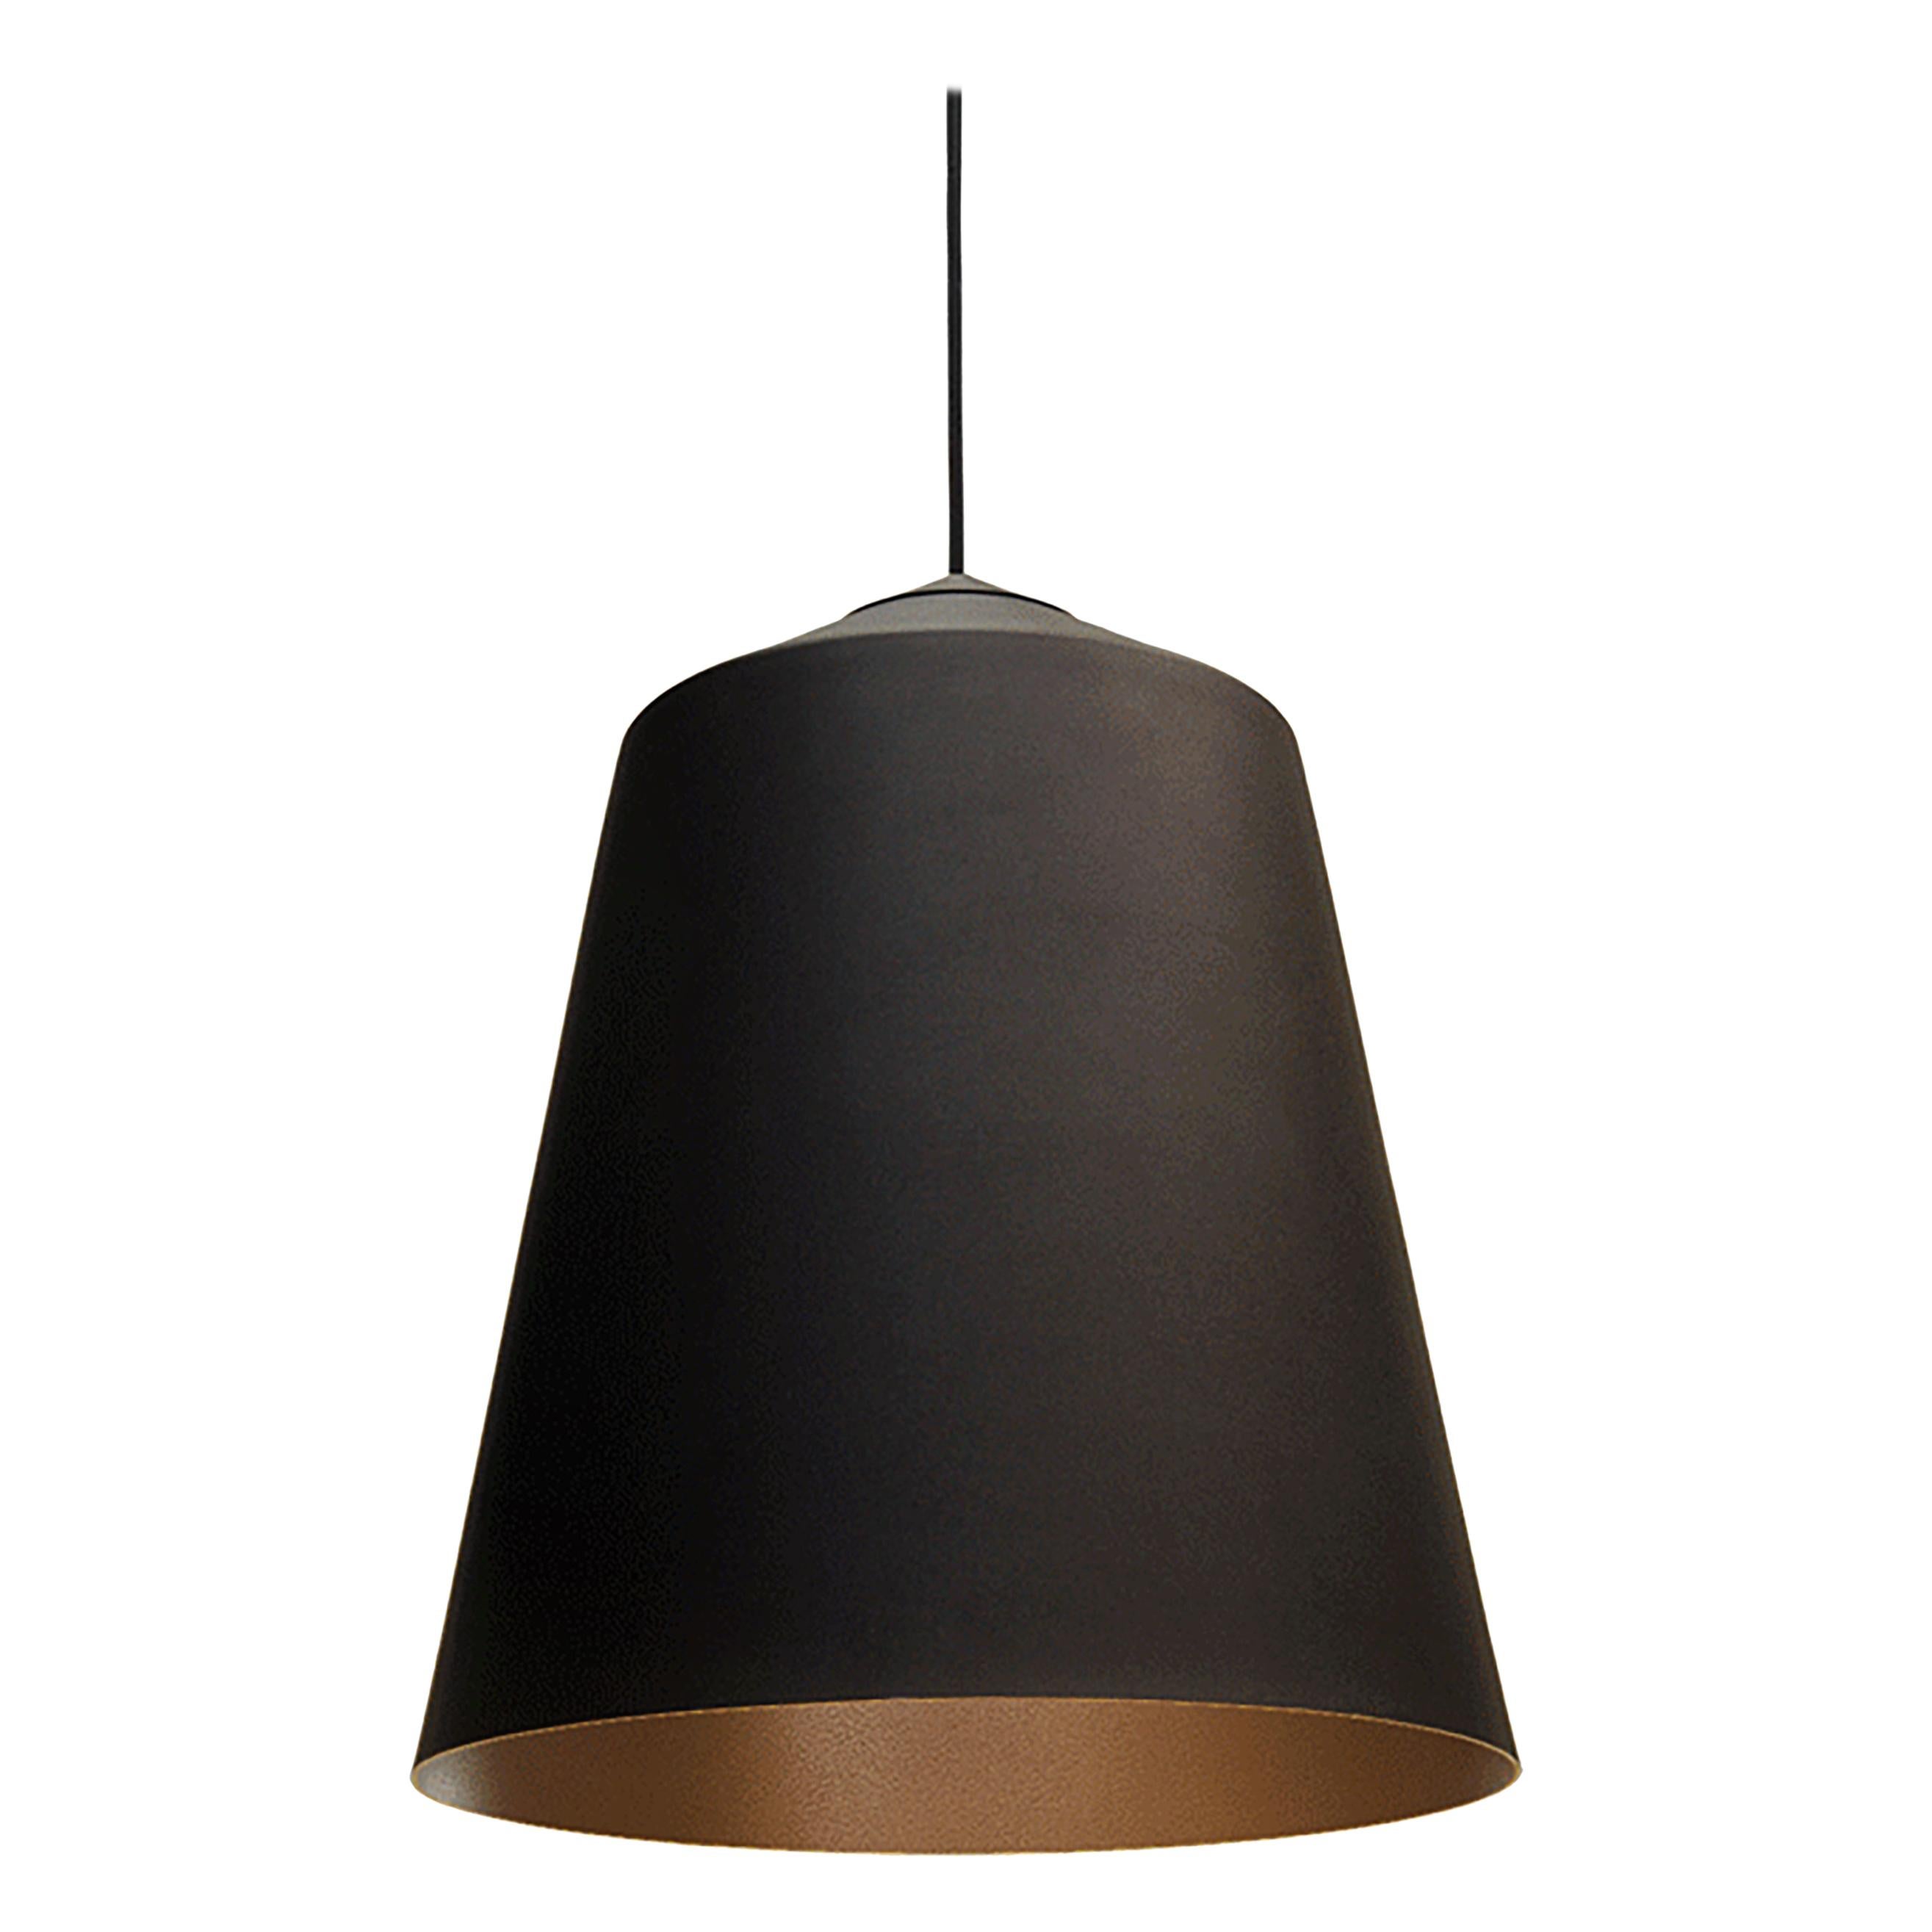 Lampe à suspension Circus de Corinna Warm for Warm, noir/bronze moyen, en stock en vente